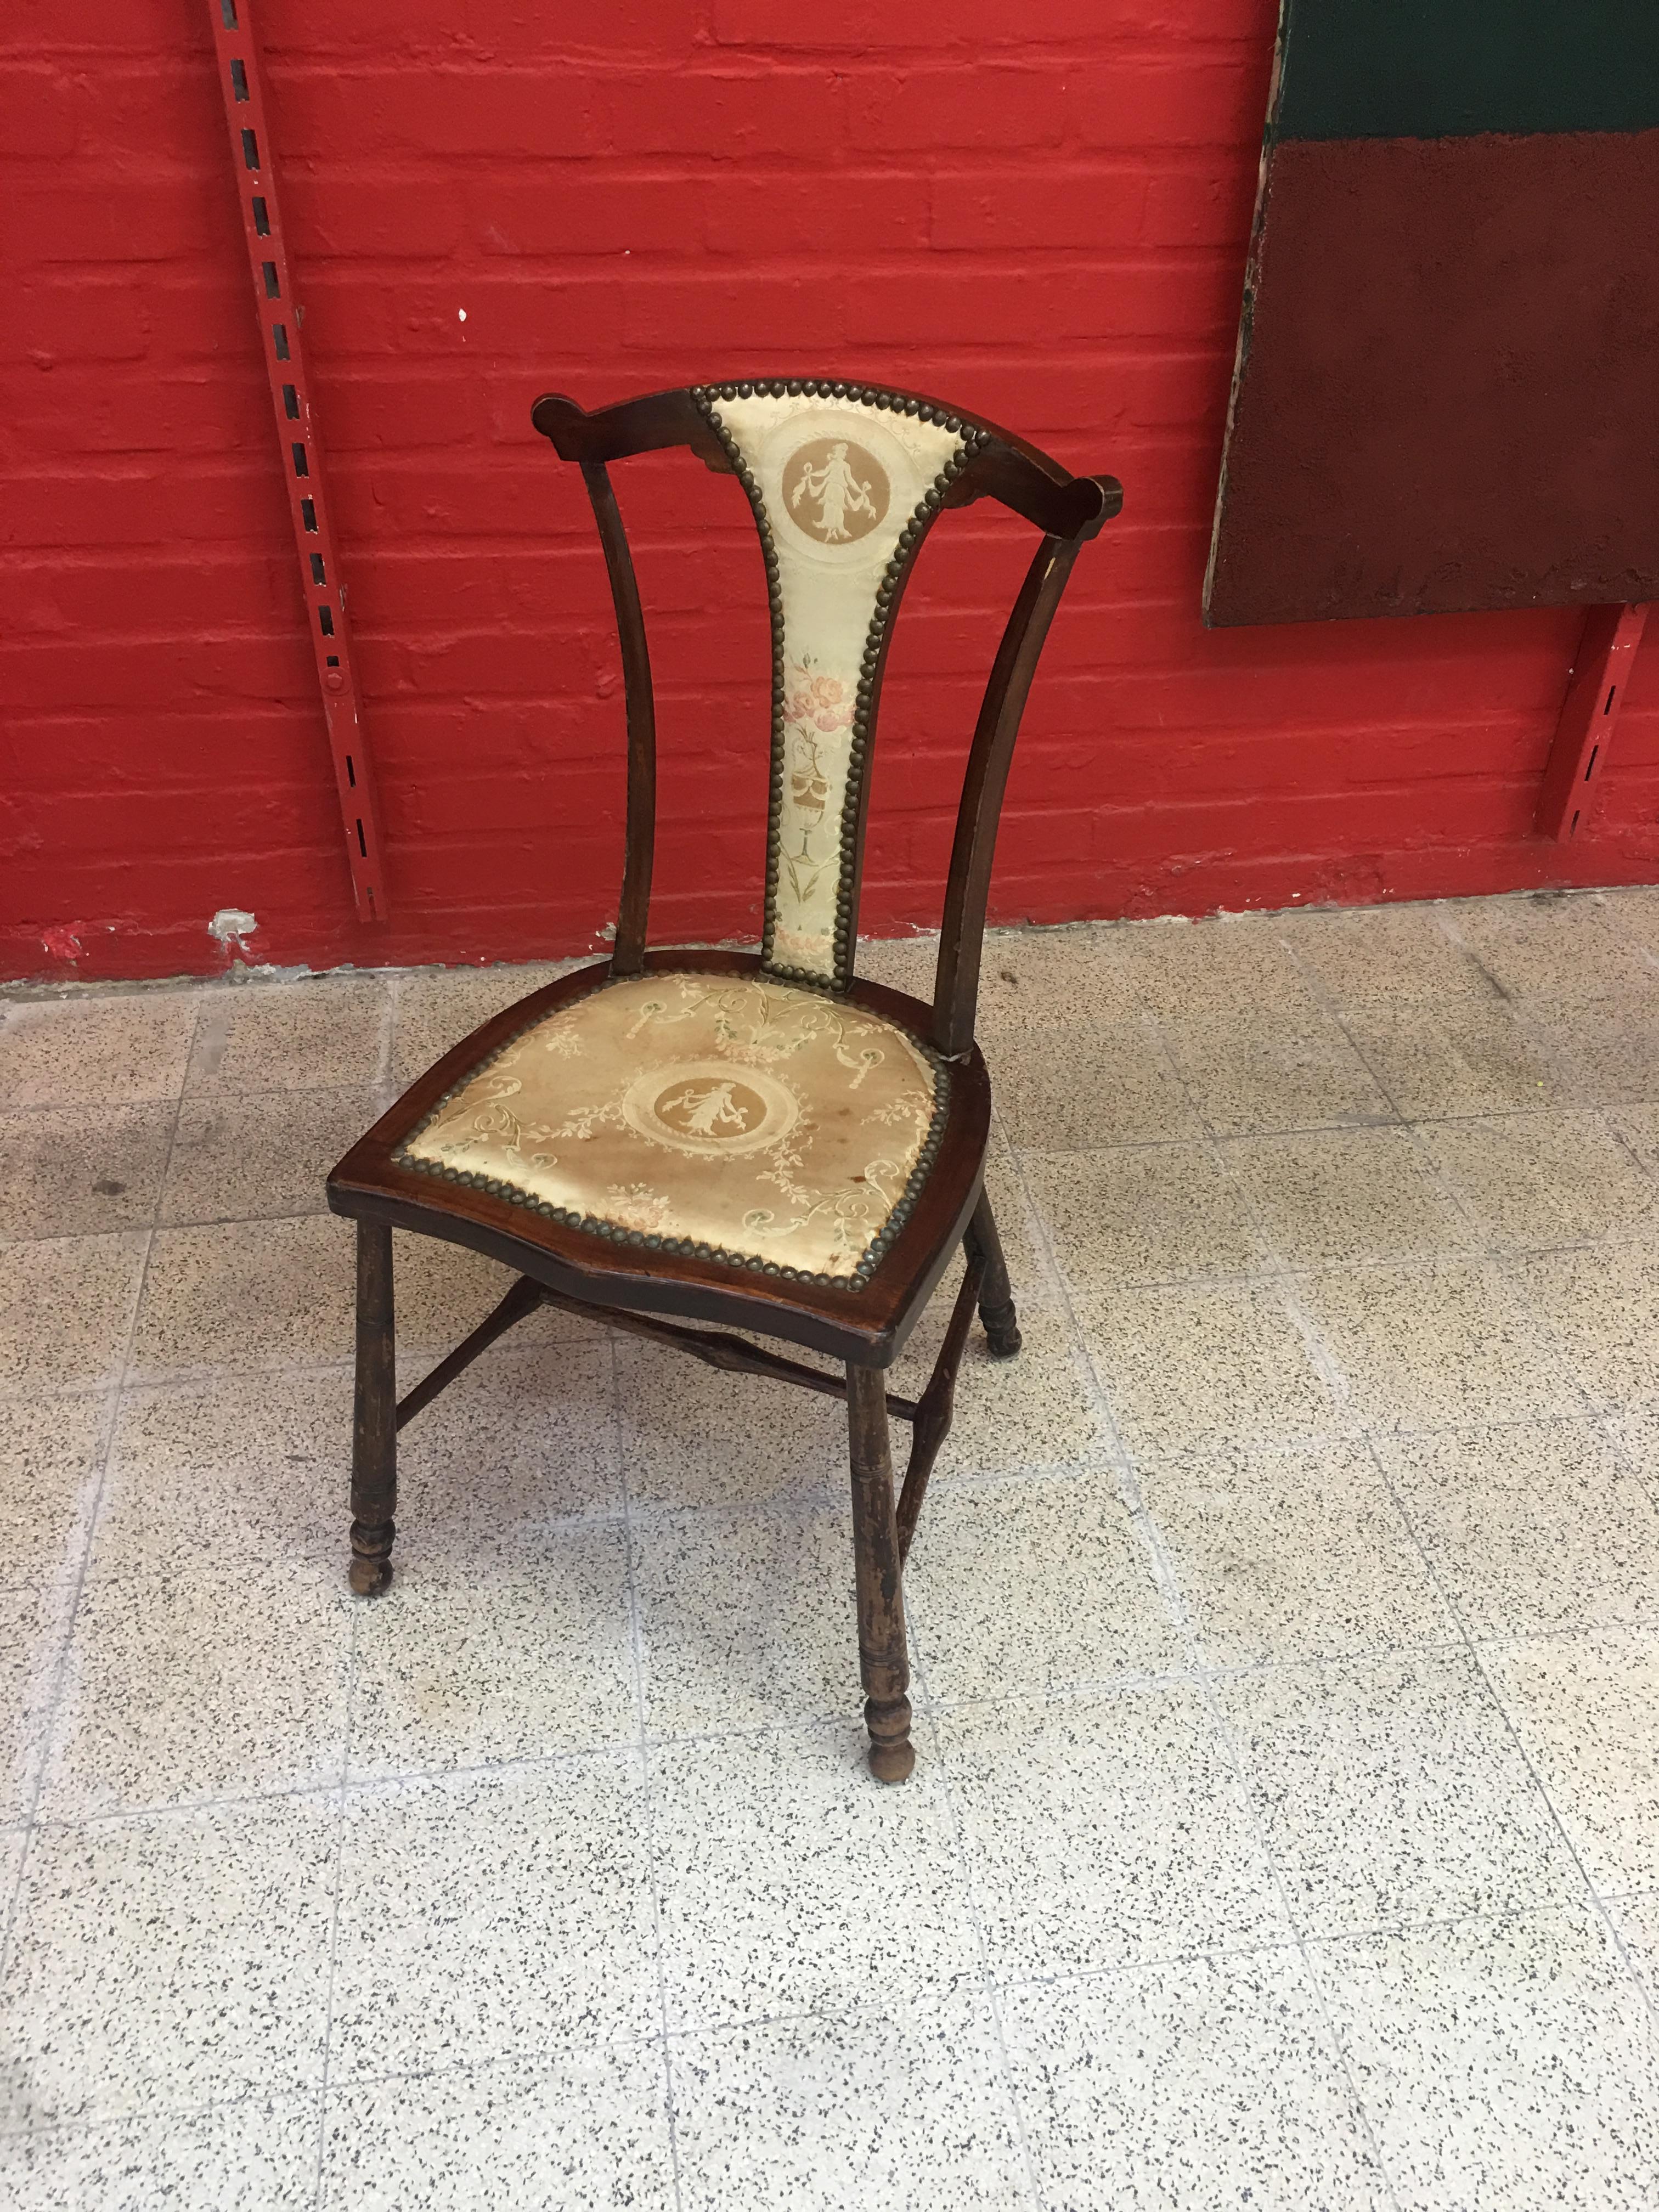 Charming little English chair, circa 1900
beautiful original fabric to net.